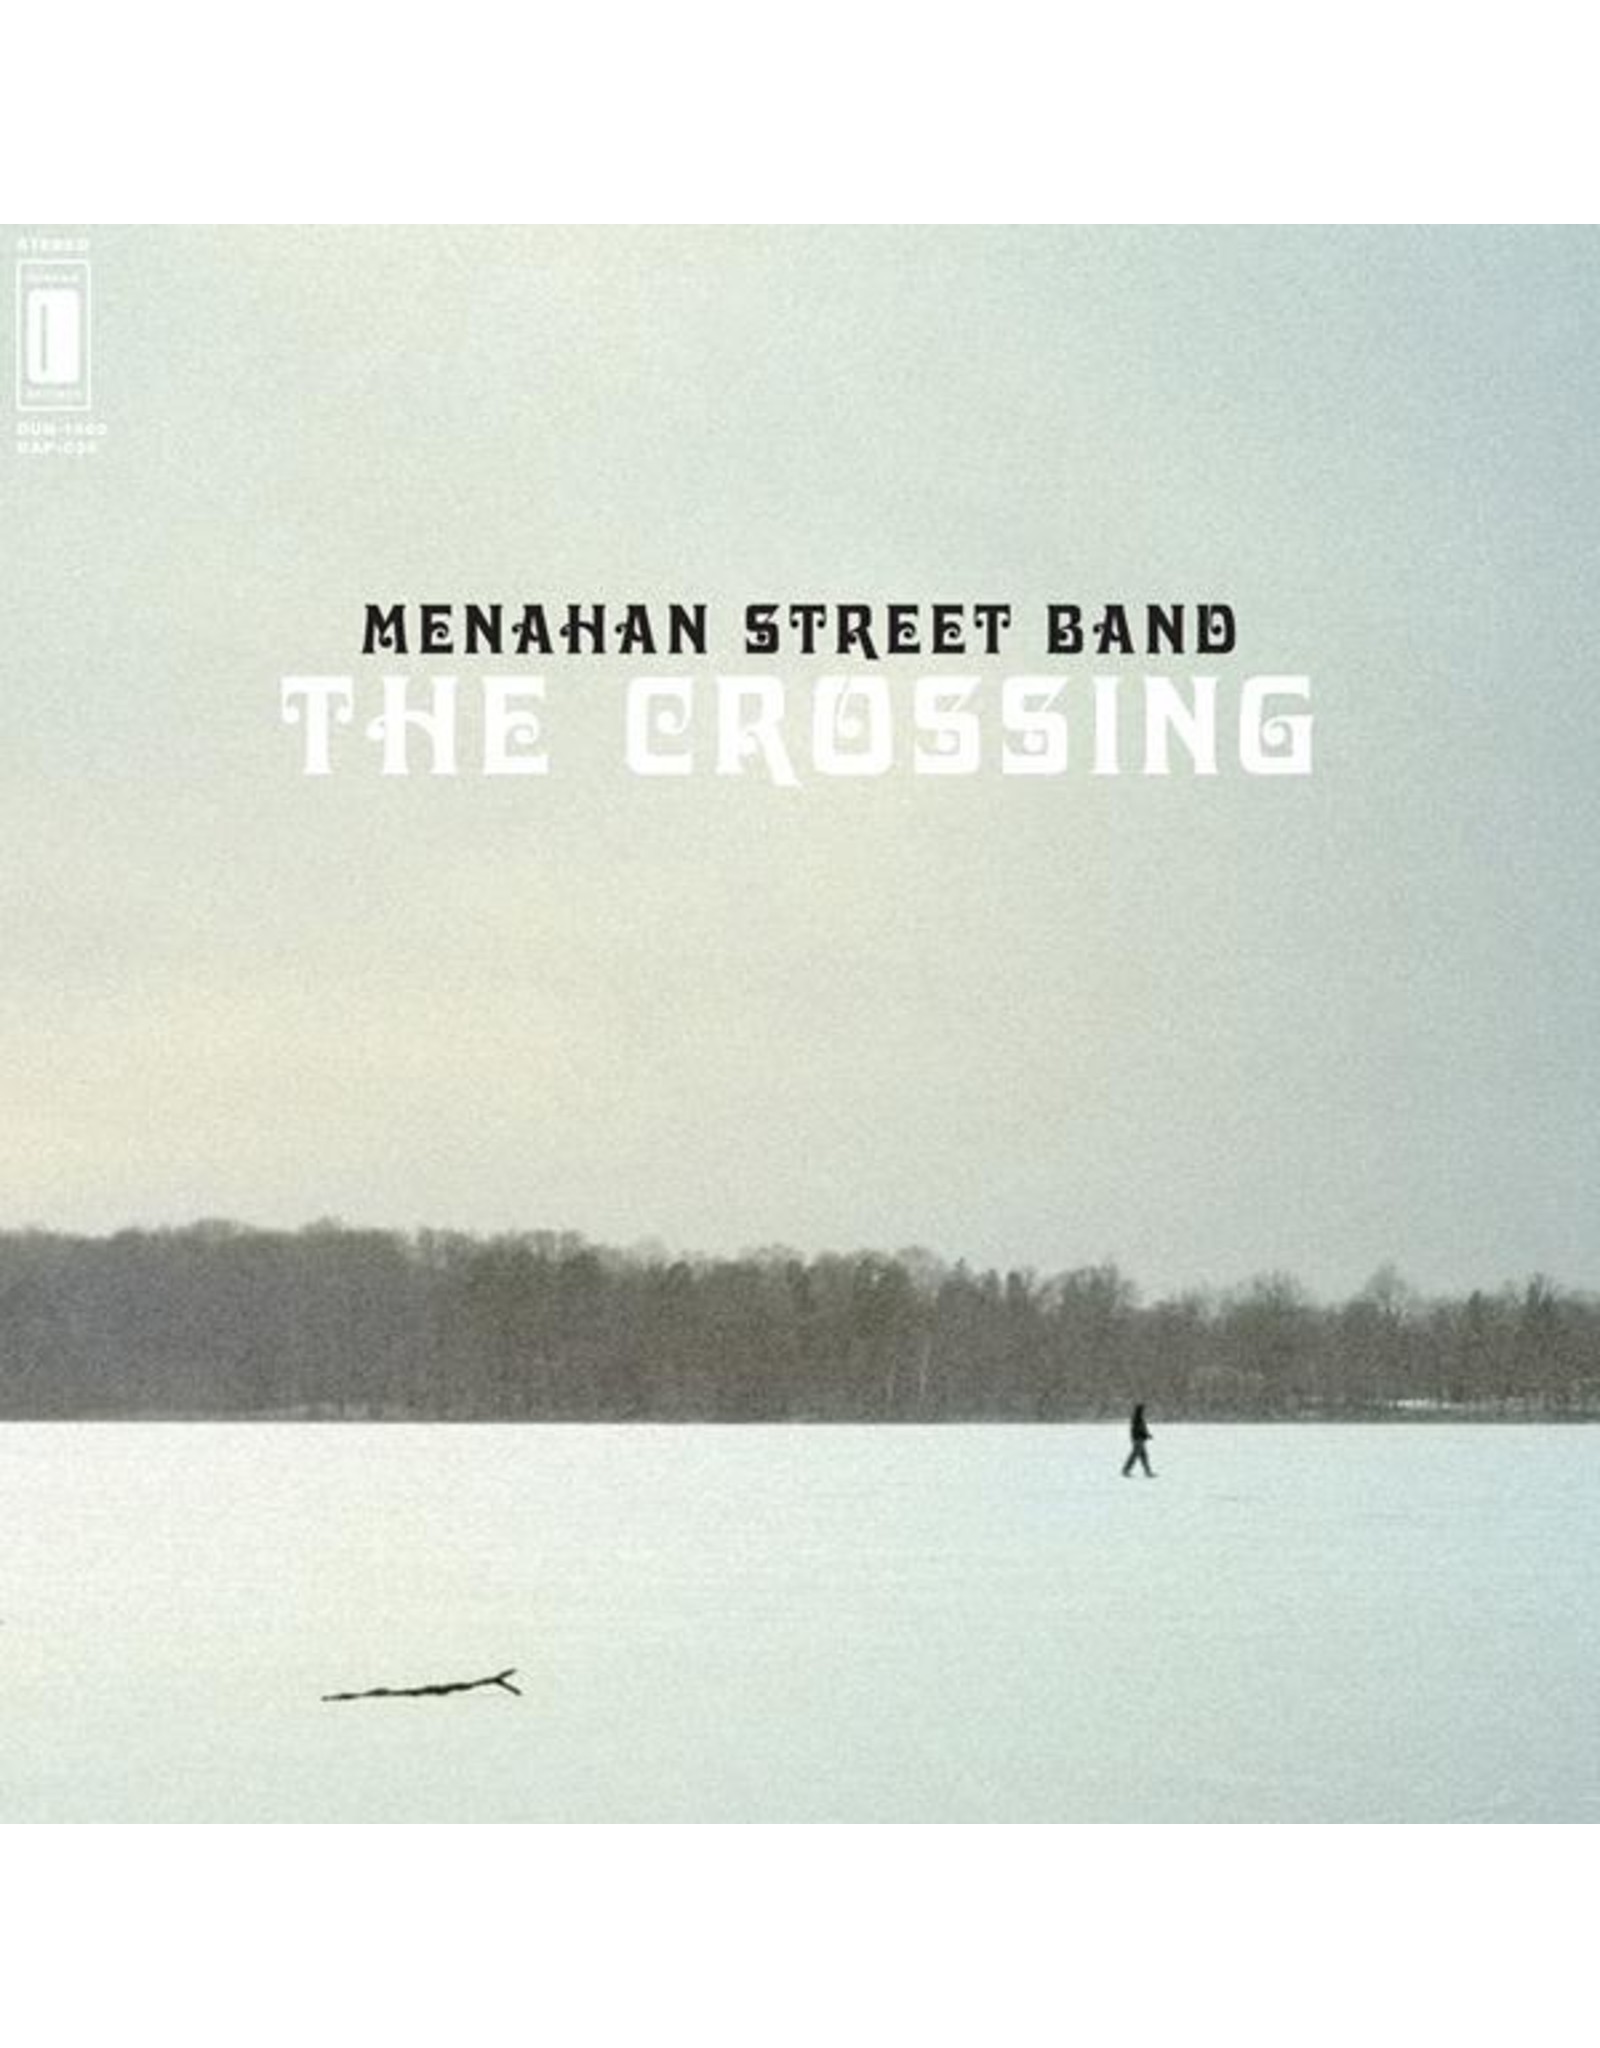 Daptone Menahan Street Band: The Crossing LP